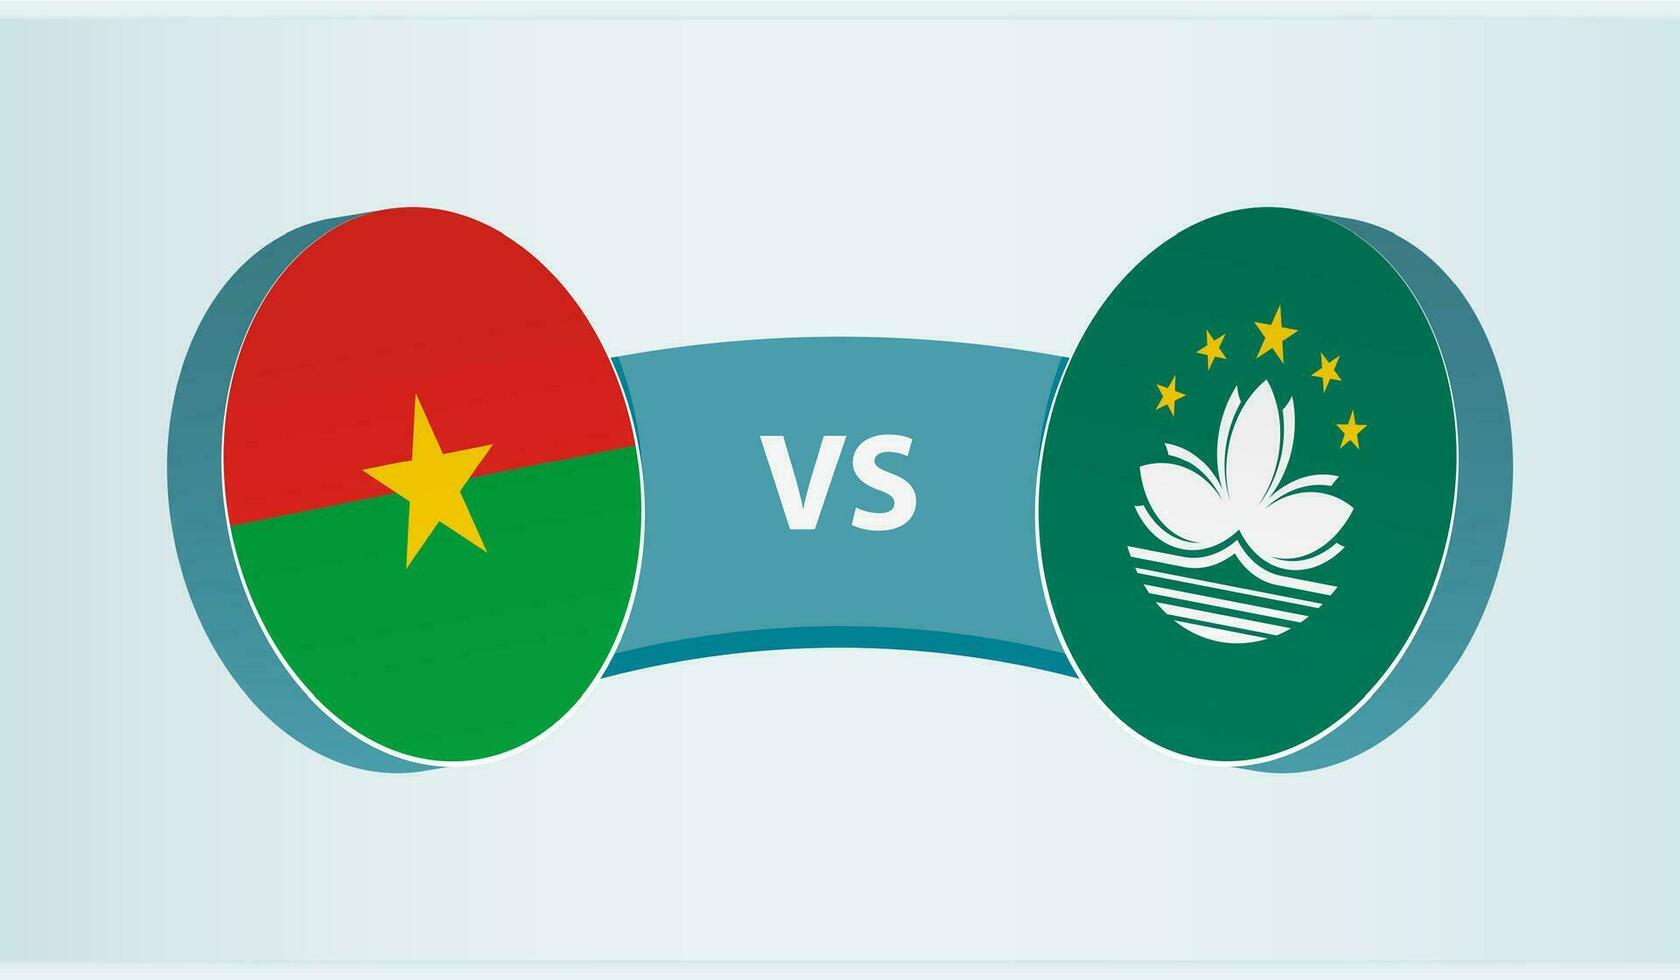 Burkina faso mot Macau, team sporter konkurrens begrepp. vektor